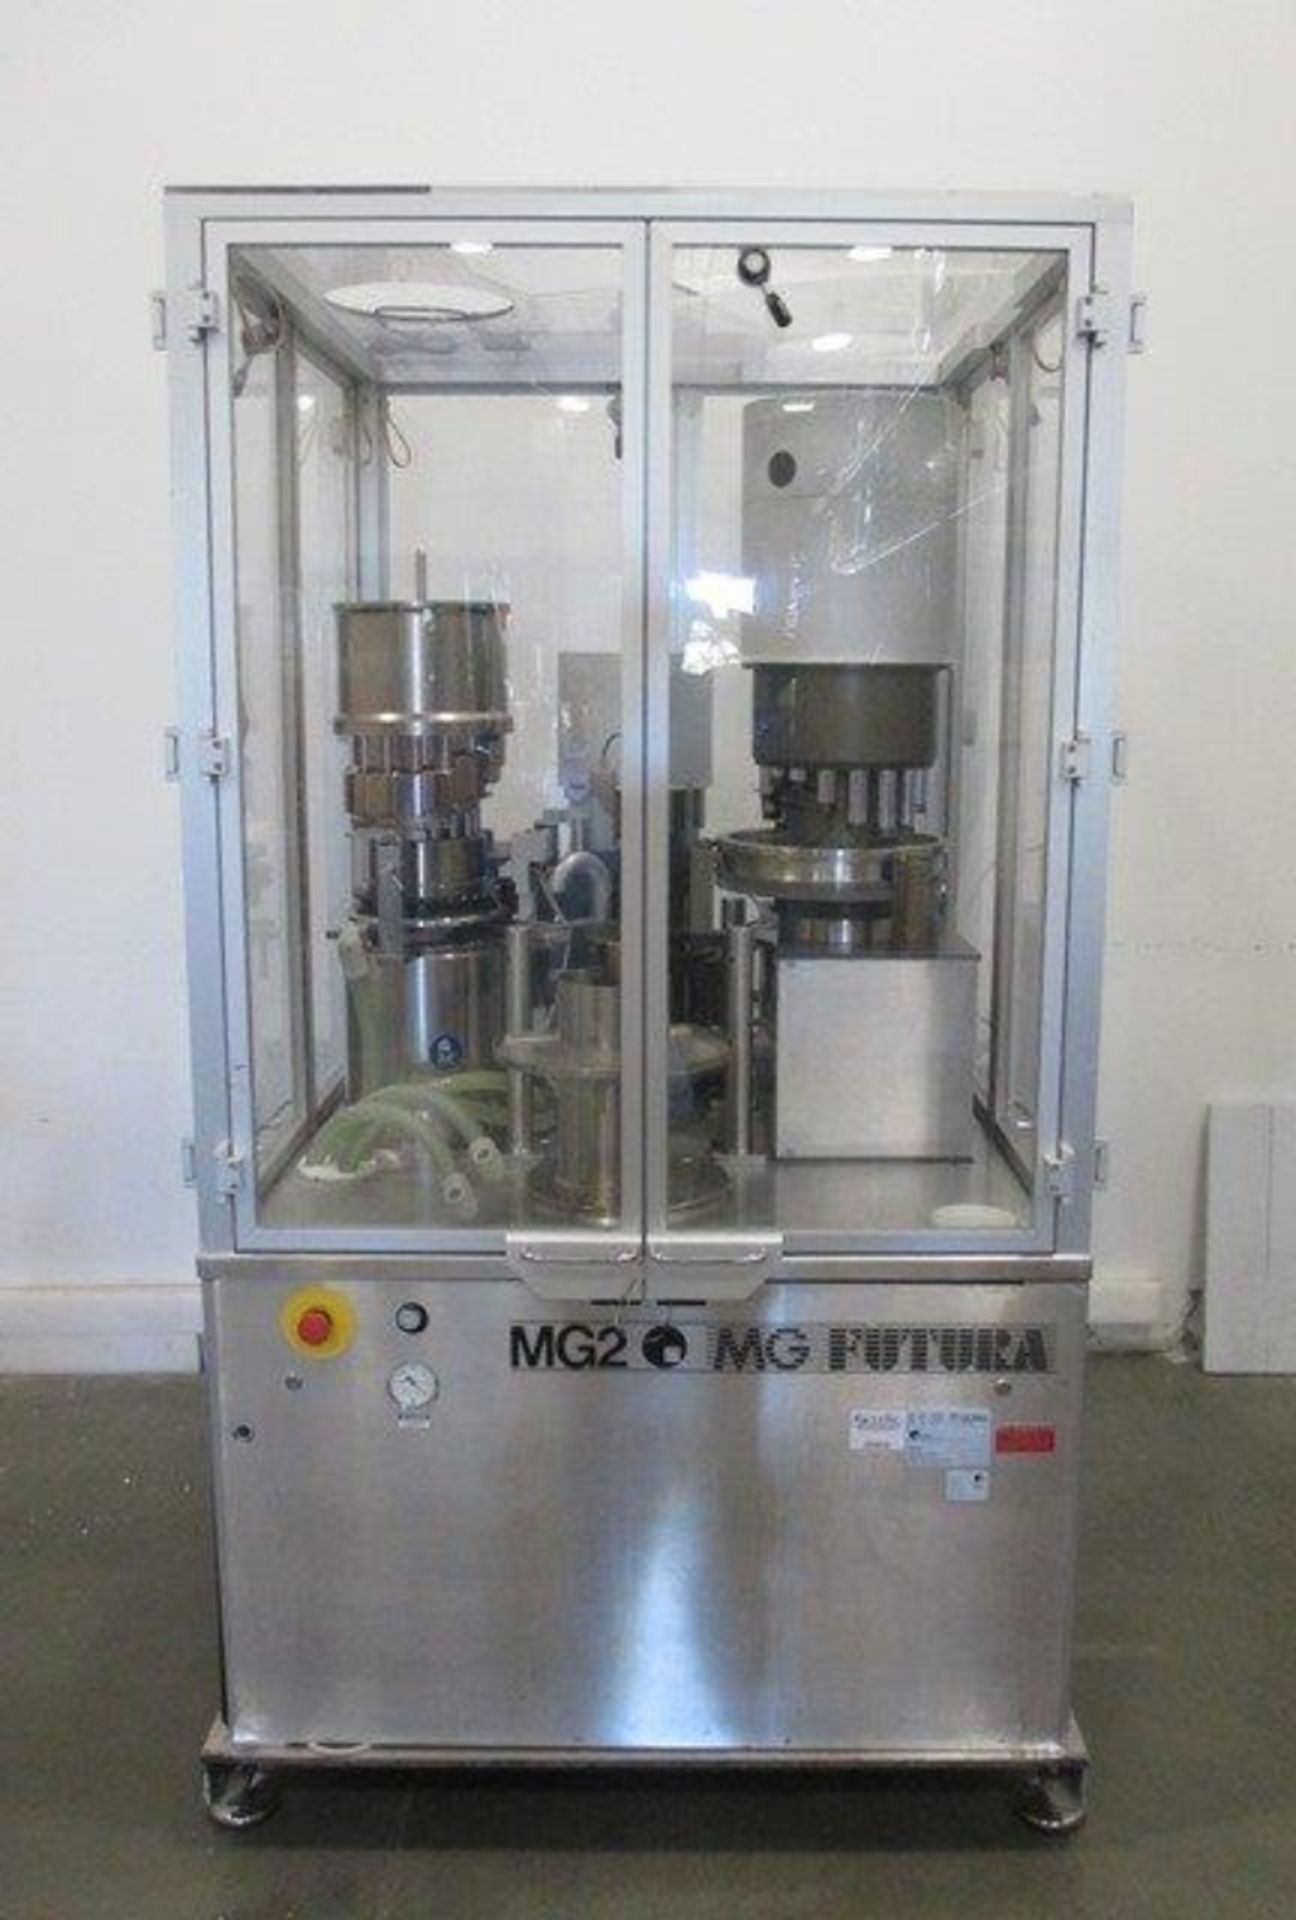 MG2 Futura Capsule Machine for Liquid and Powder